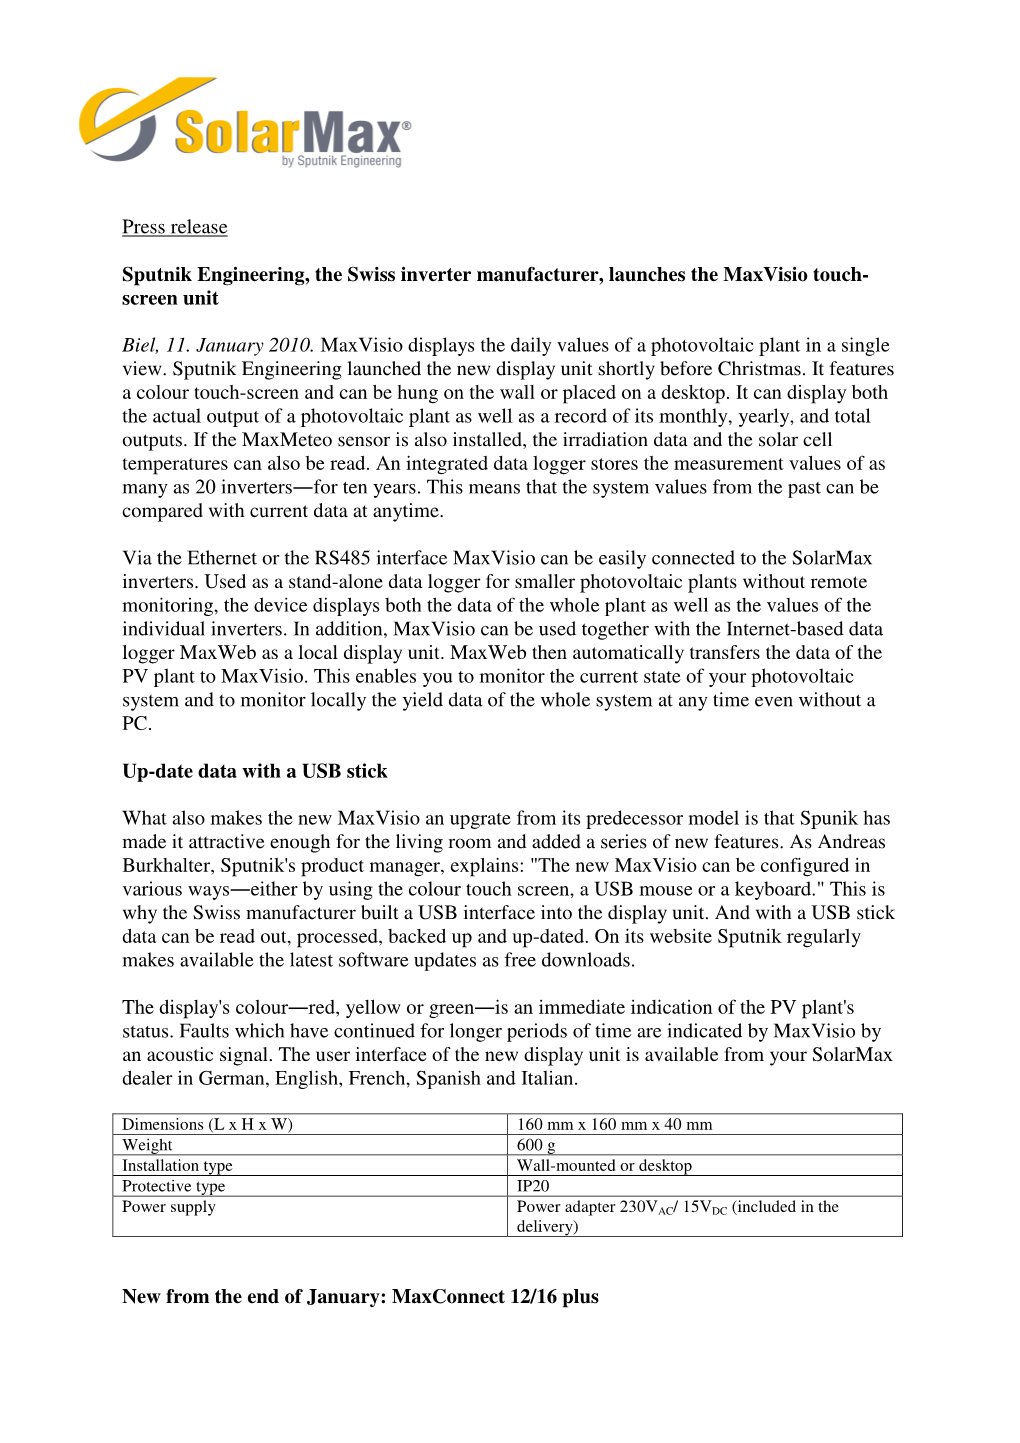 Press Release Sputnik Engineering, the Swiss Inverter